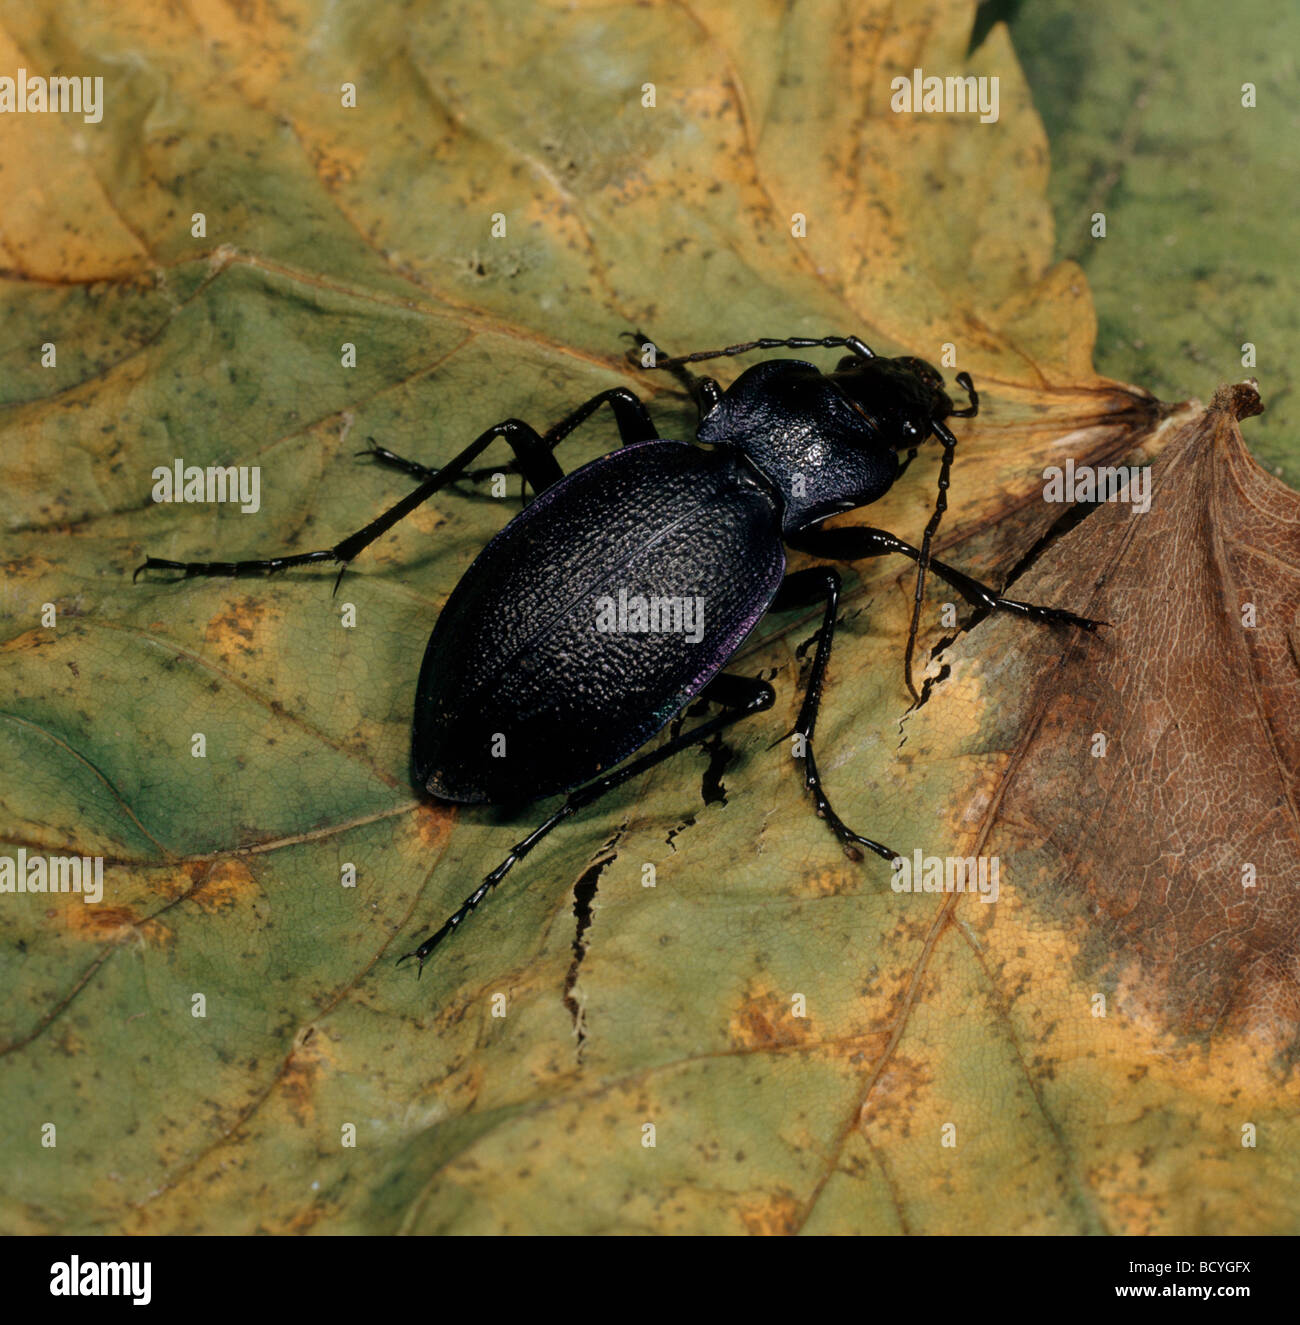 Massa viola beetle / Carabus tendente al violaceo Foto Stock